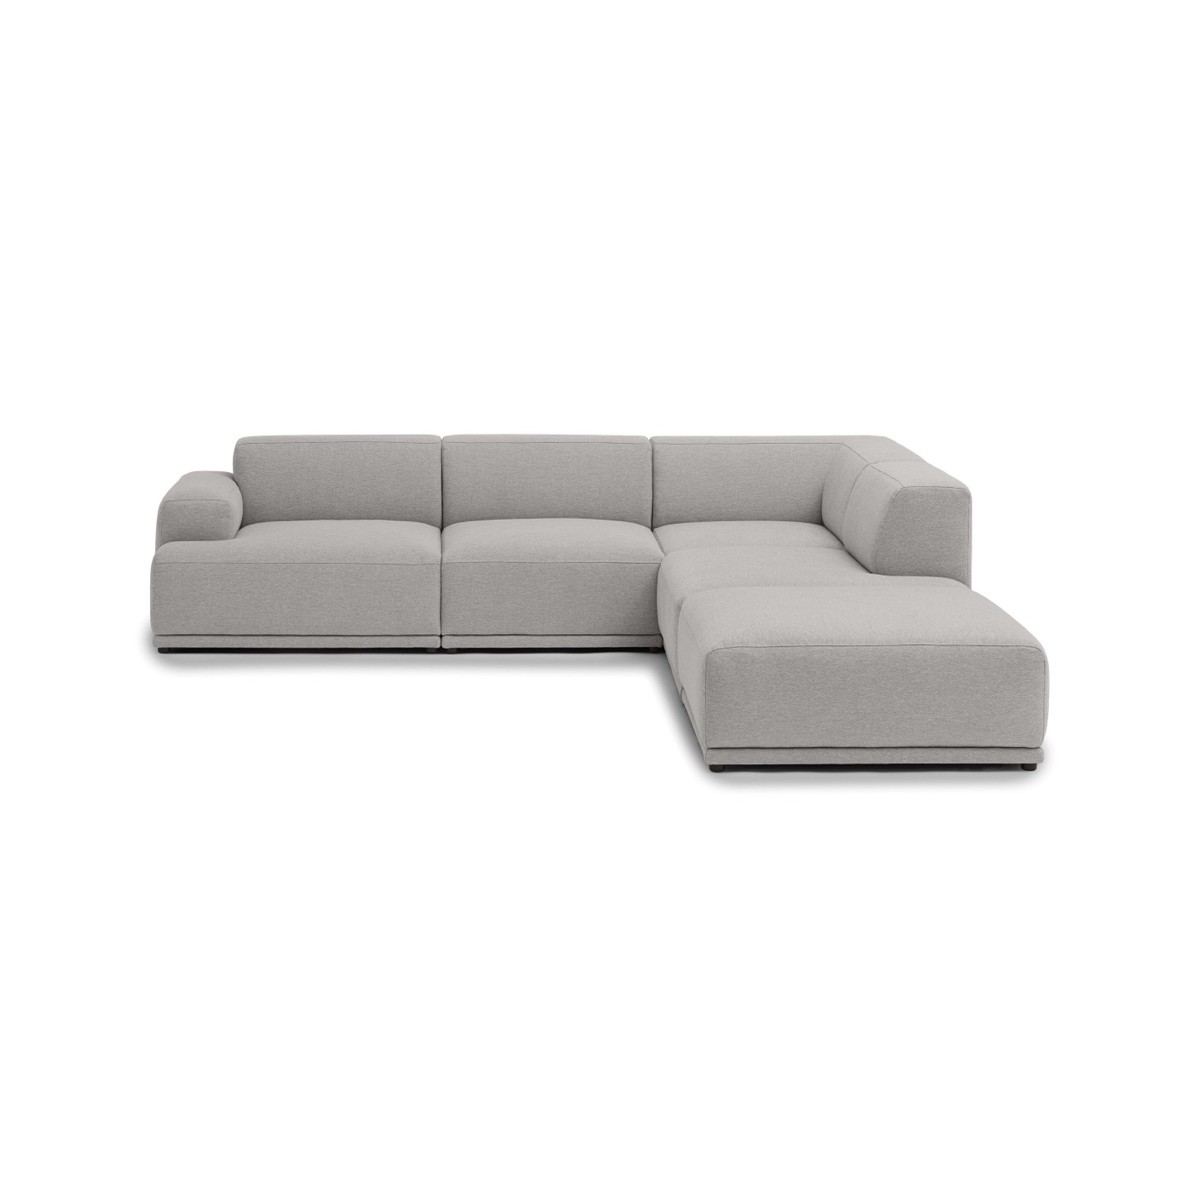 Connect Soft - corner sofa, Configuration 2 - Clay 12 fabric